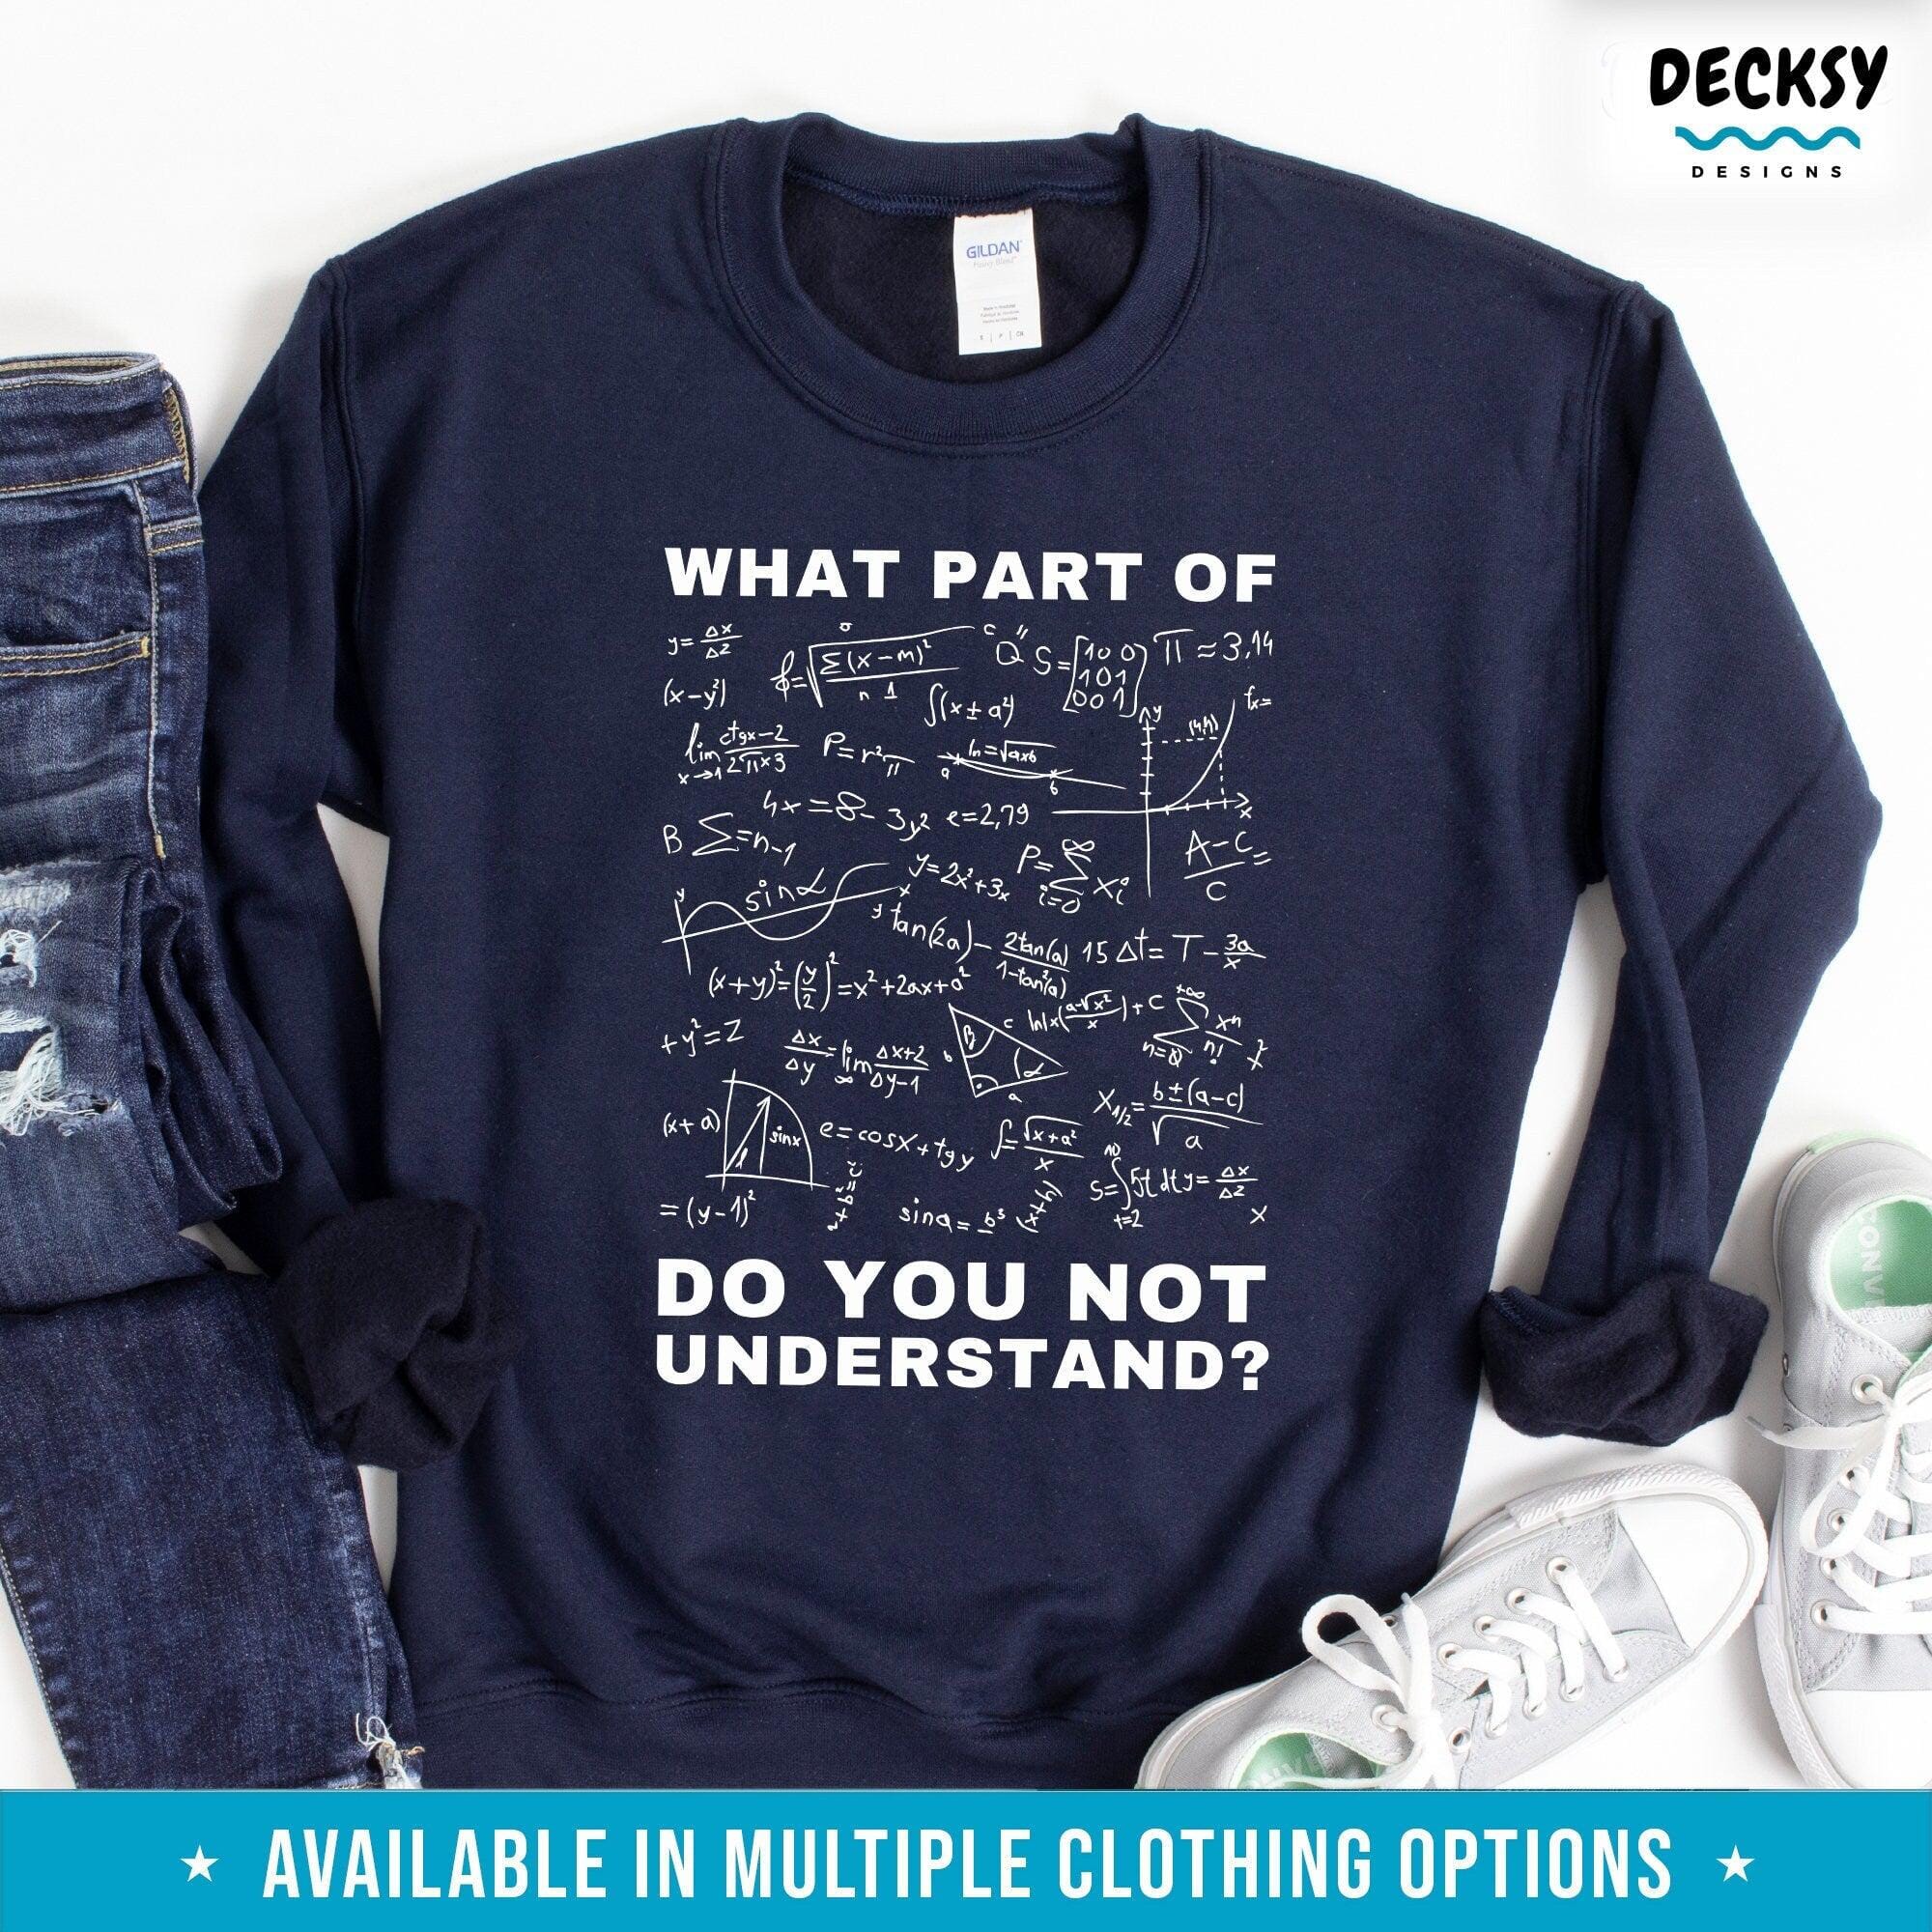 Math Teacher Shirt, Mathematician Gift-Clothing:Gender-Neutral Adult Clothing:Tops & Tees:T-shirts:Graphic Tees-DecksyDesigns